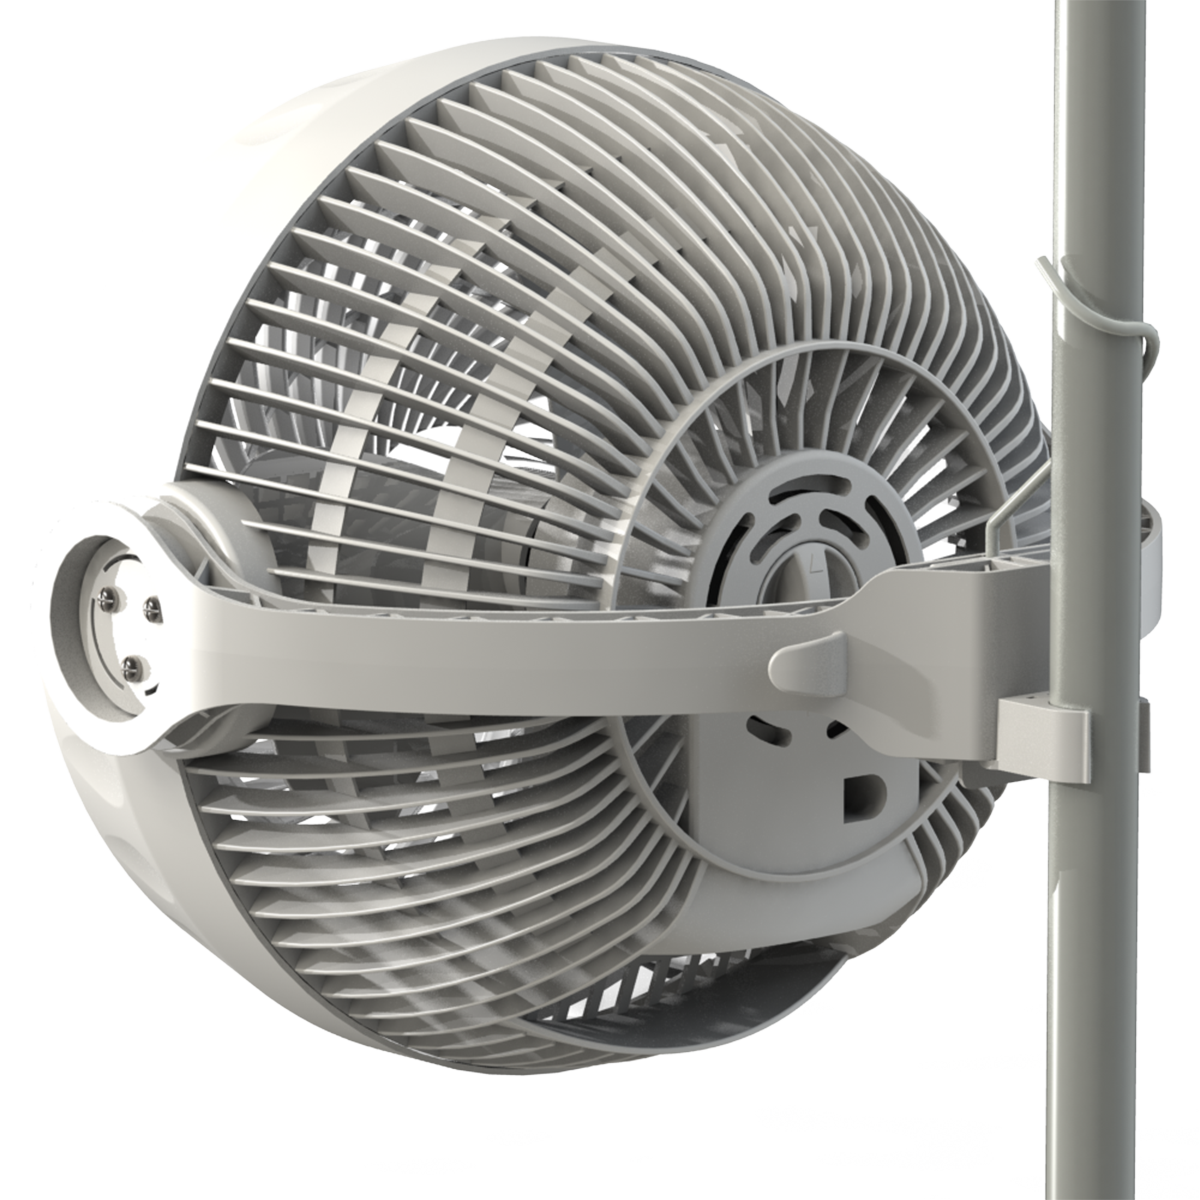 Вентилятор для гроубокса. Вентилятор Monkey Fan 30 Вт. Вентилятор Secret Jardin Monkey Fan 30. Вентилятор Monkey Fan 16 w. Вентилятор Monkey Fan, 16 w (двухскоростной.